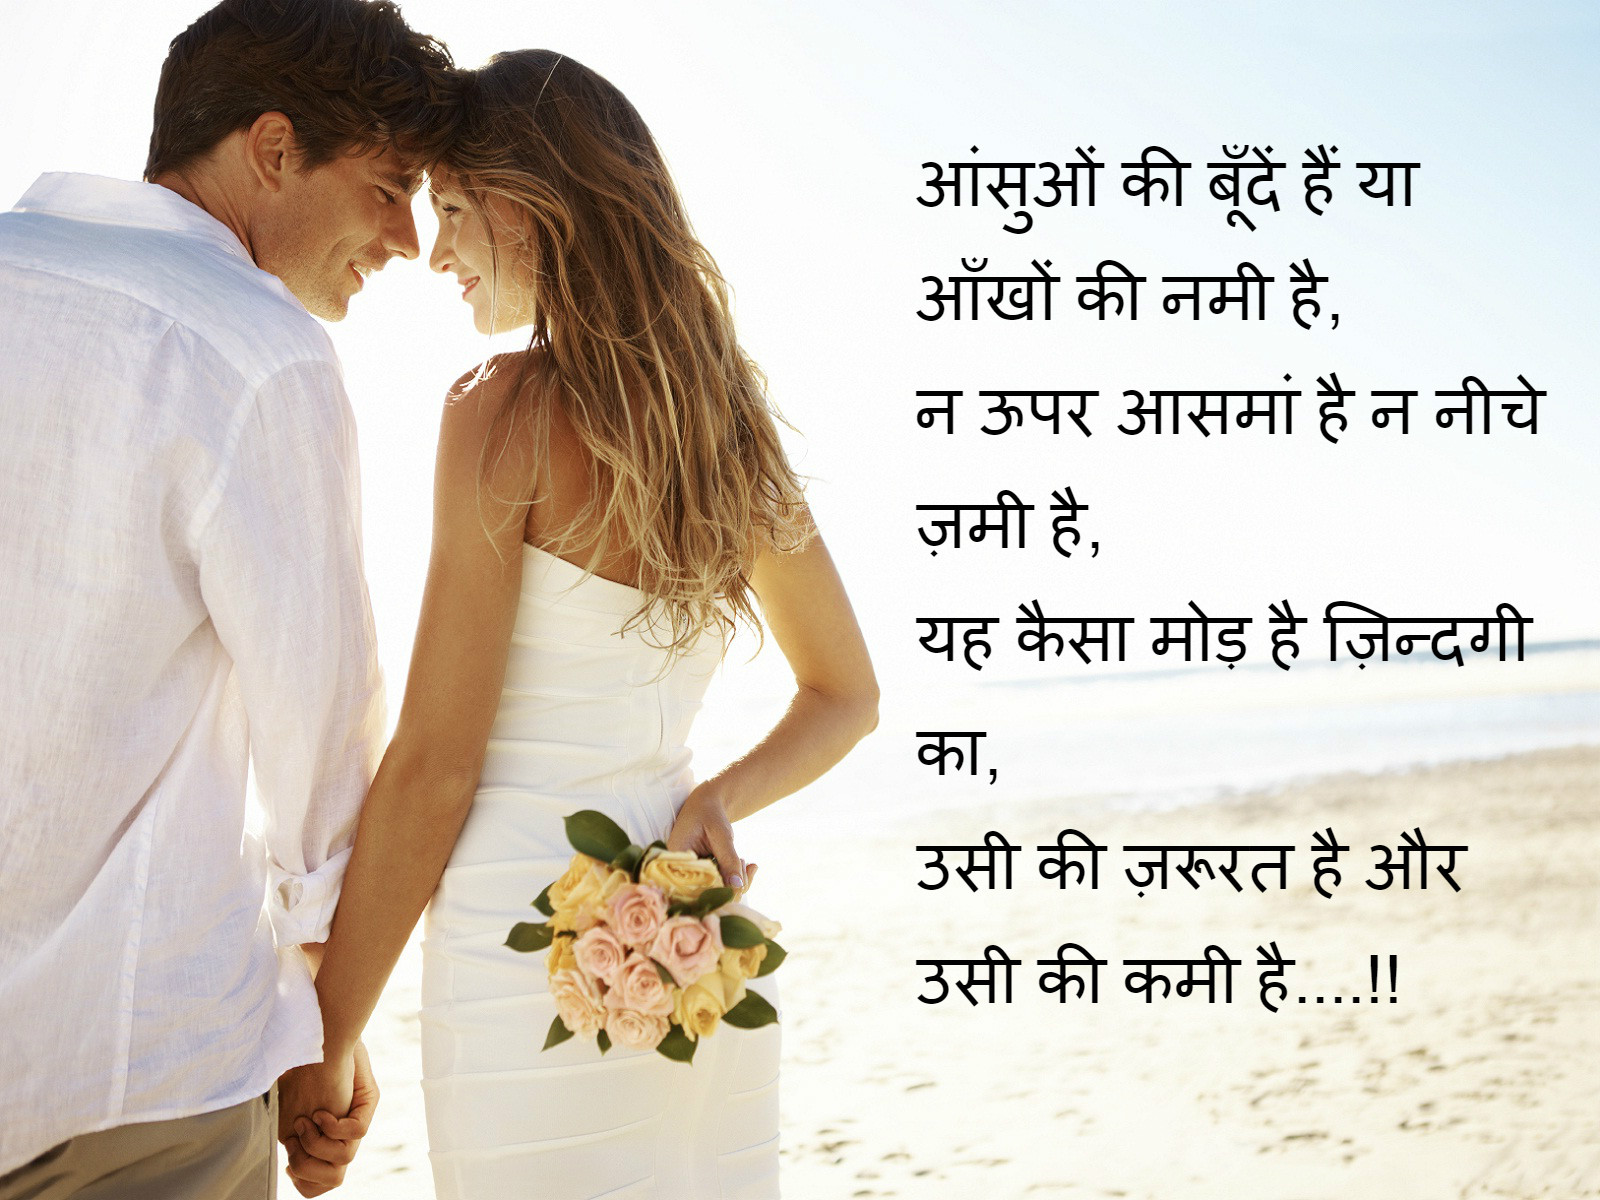 WhatsApp Romantic Love SMS Pic for Girlfriend / Boyfriend, Bollywood. sourc...